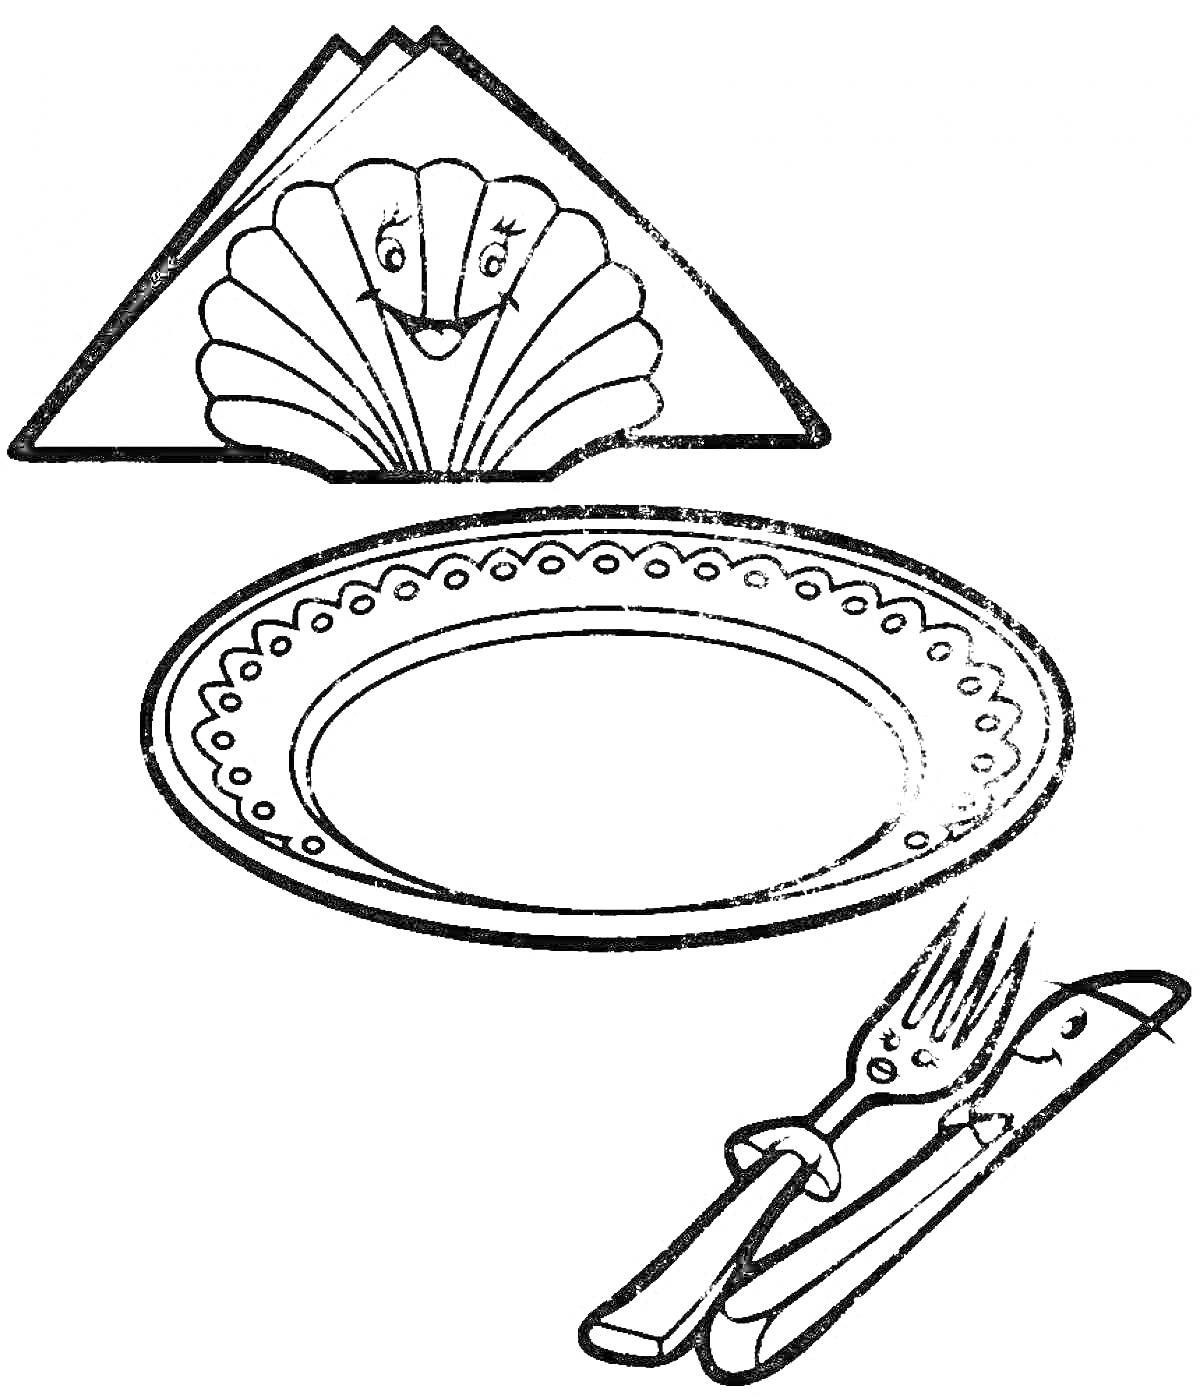 Тарелка с узорами, салфетка с лицом, нож и вилка